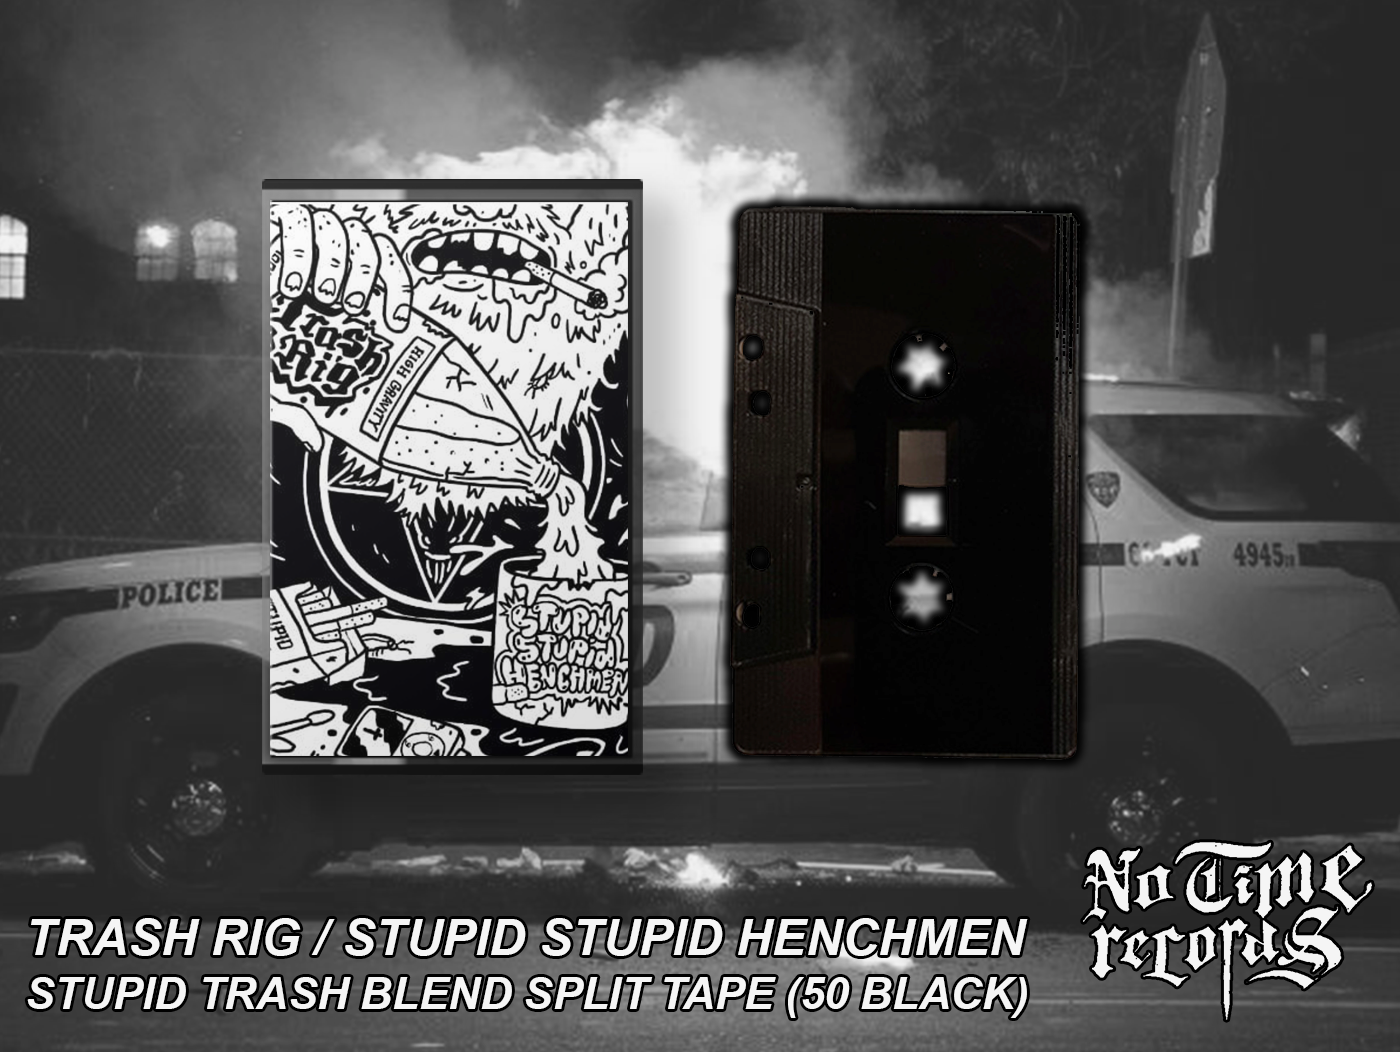 Stupid Stupid Henchmen / Trash Rig - Split Cassette